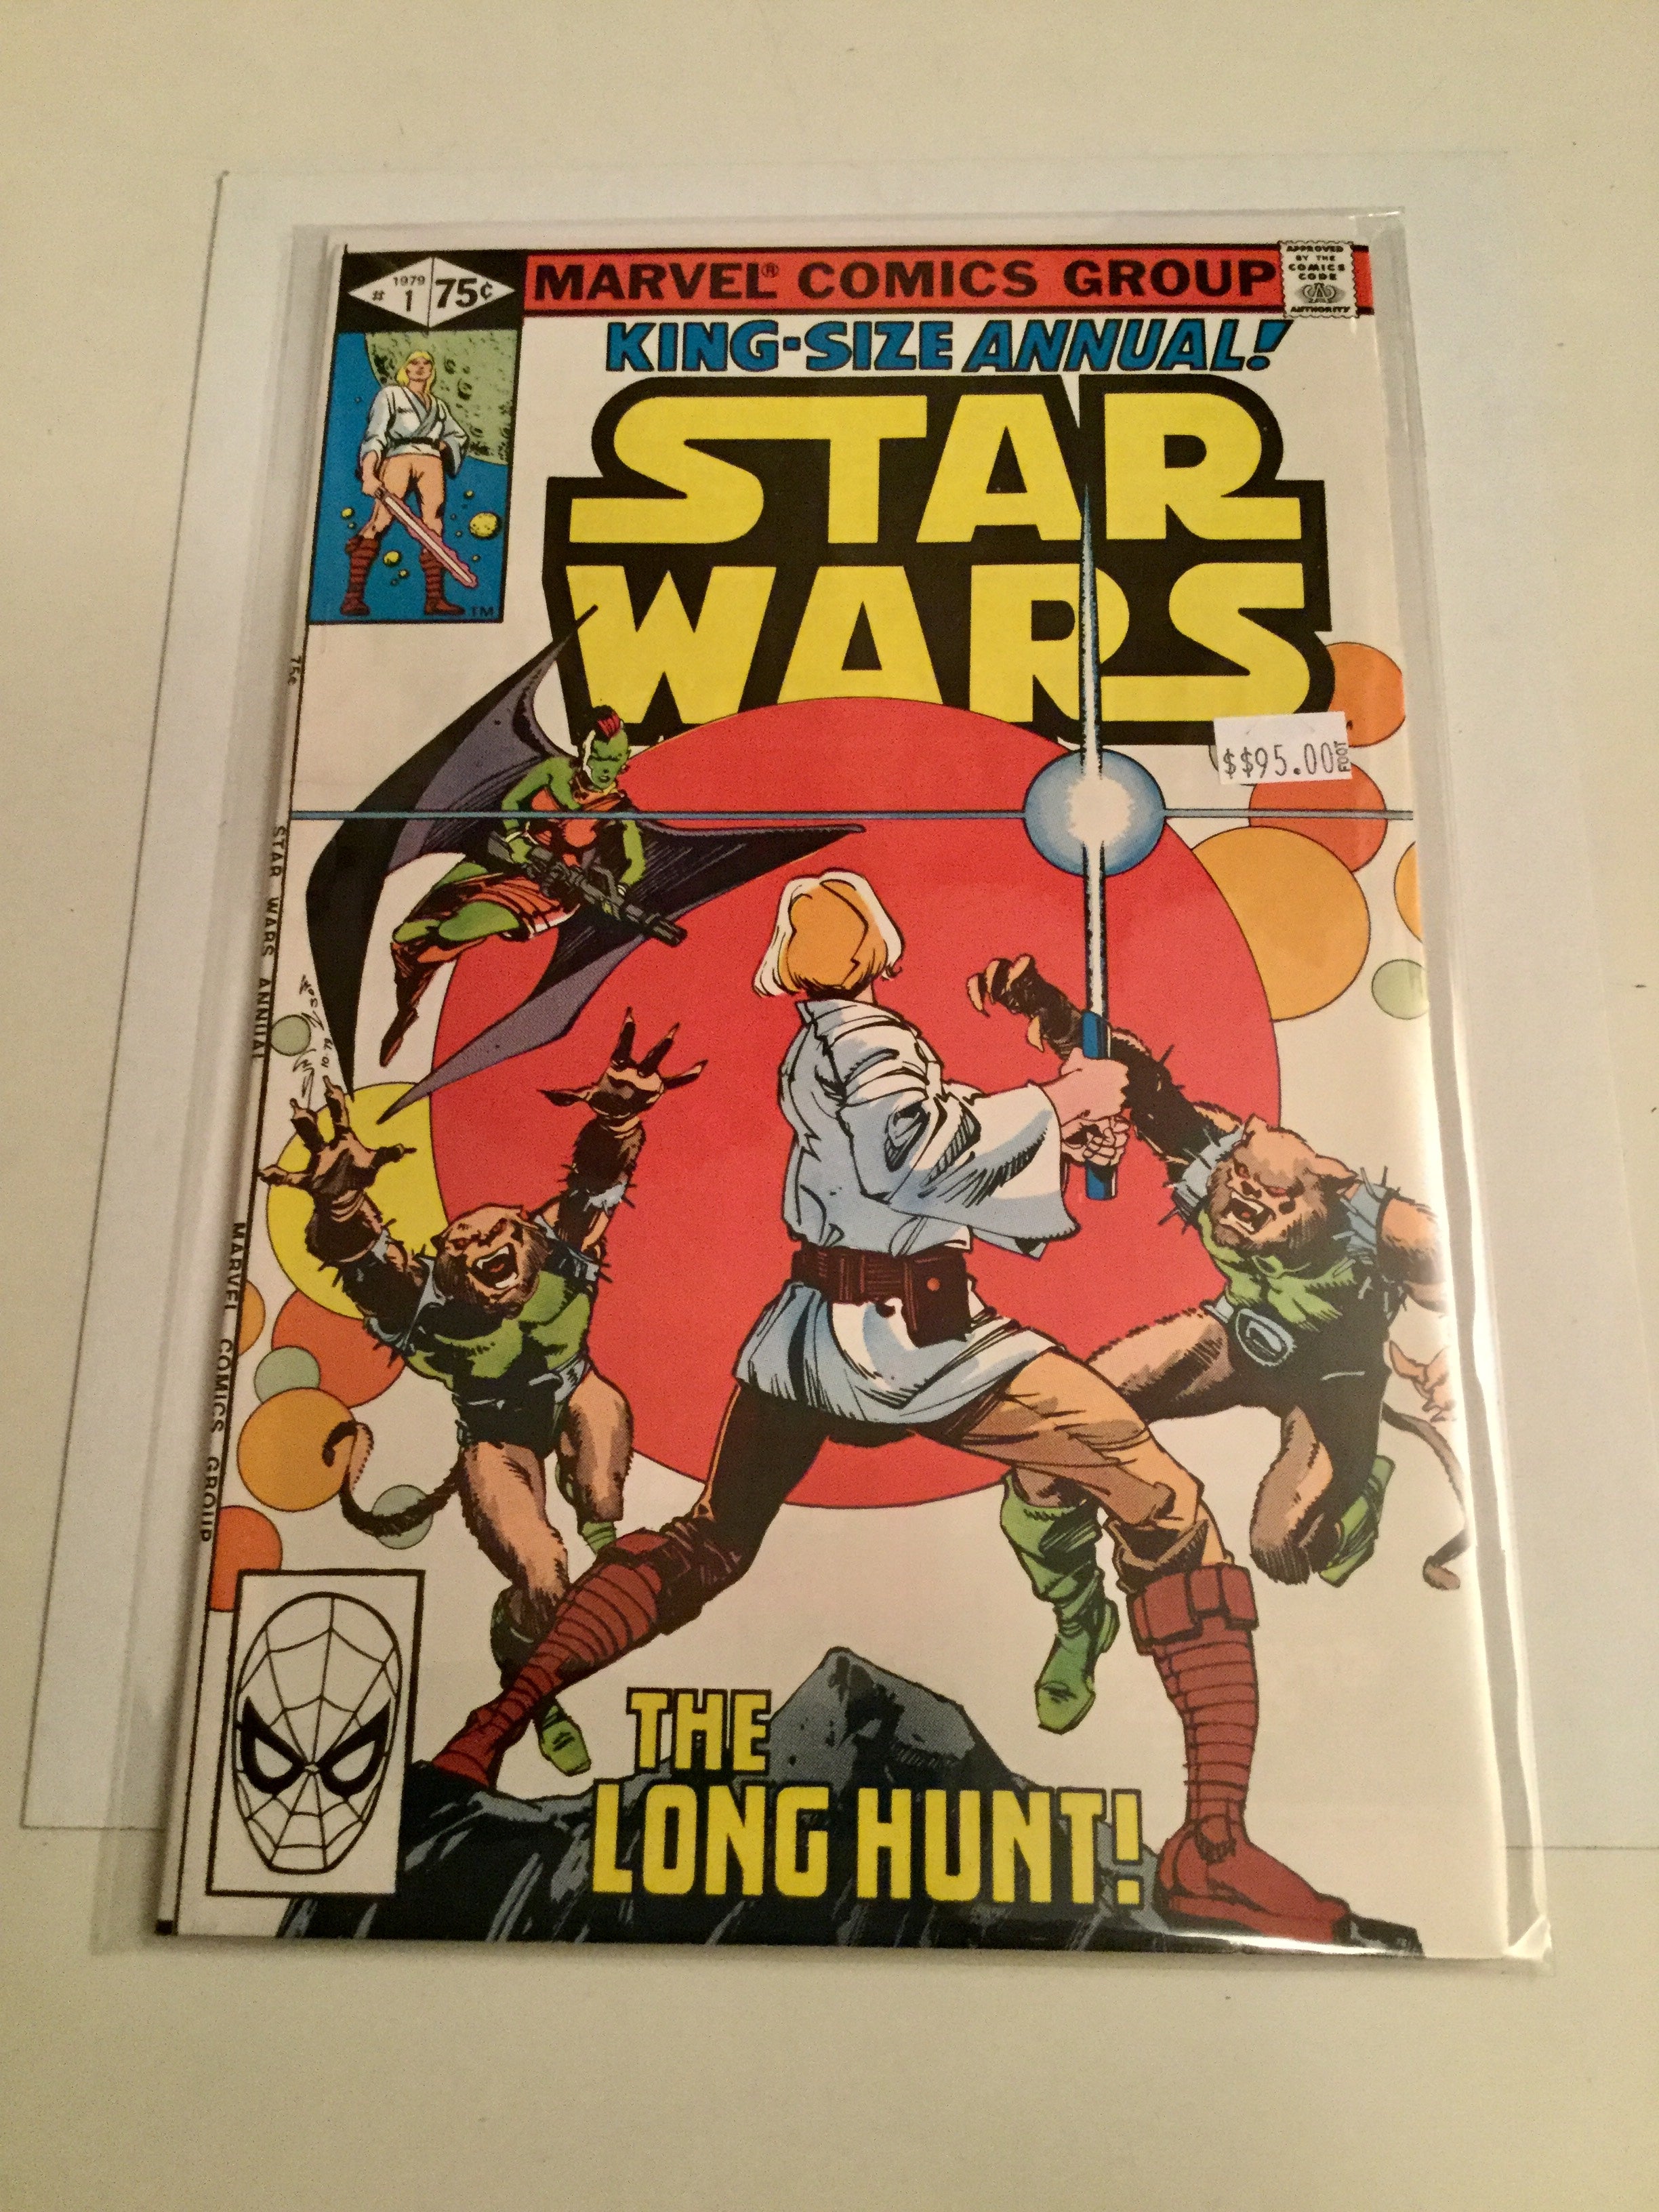 Star Wars Annual #1 high grade comic book